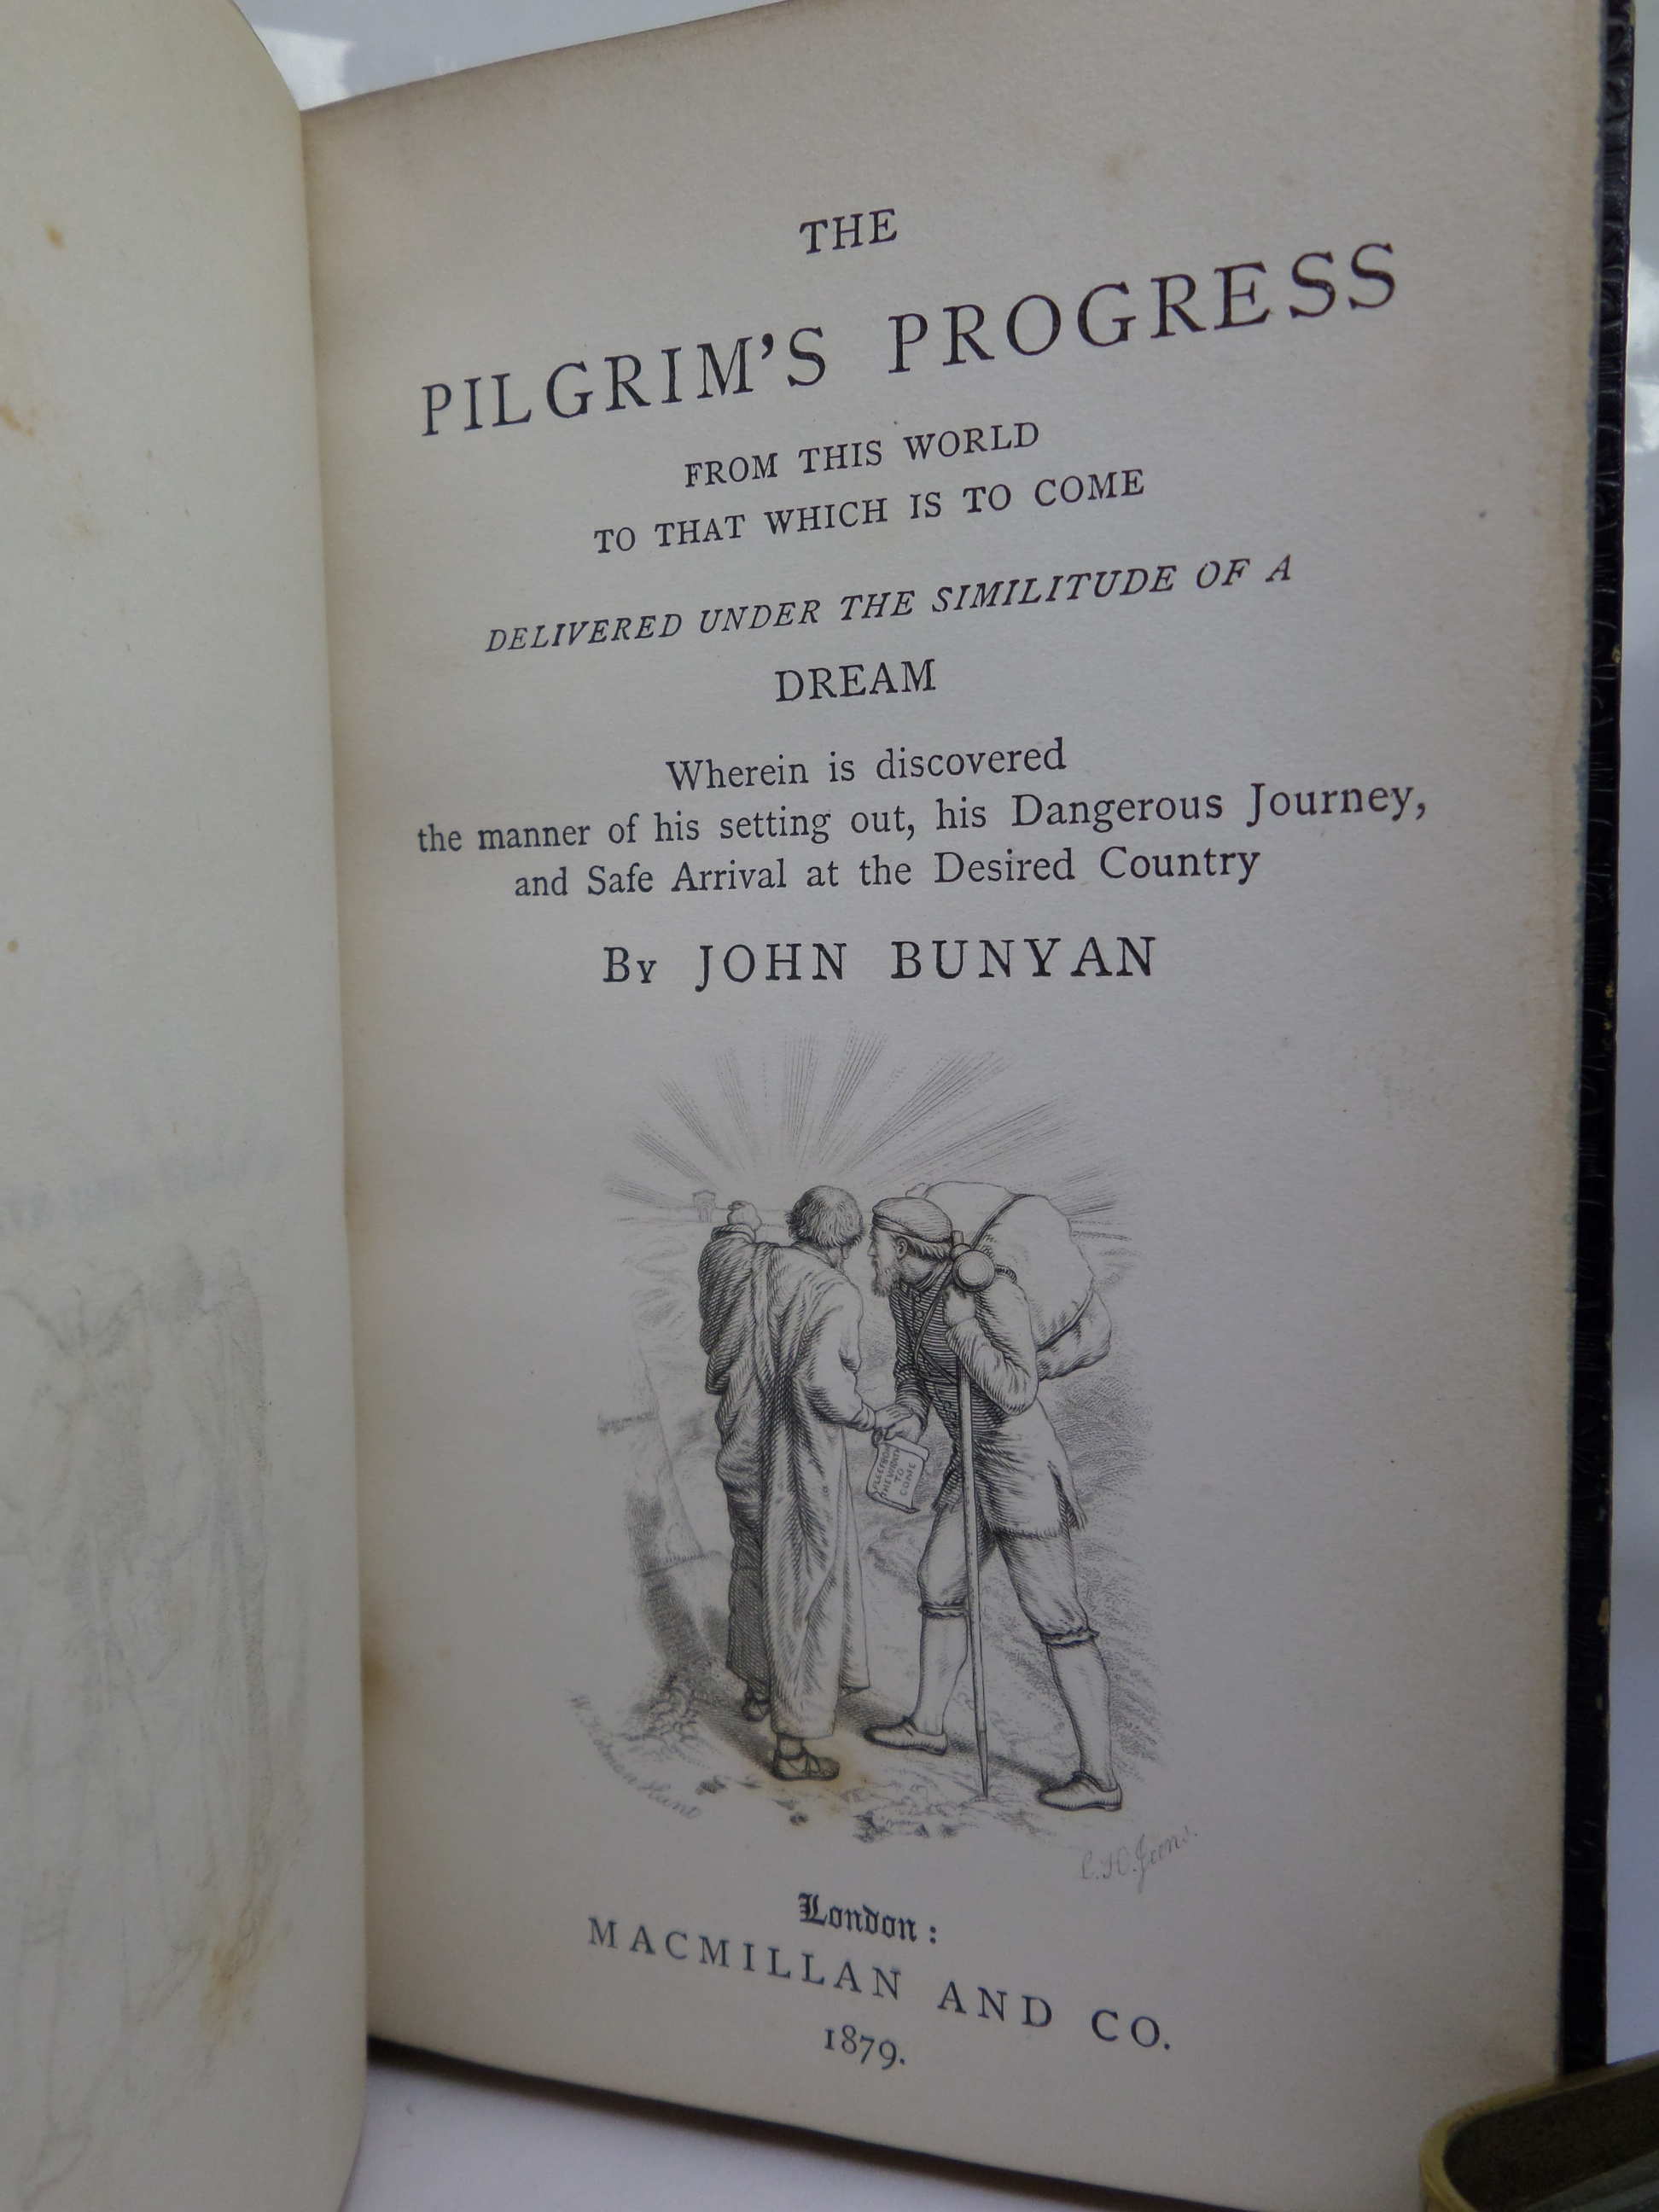 FORE-EDGE PAINTING - THE PILGRIM'S PROGRESS BY JOHN BUNYAN 1879 LEATHER-BOUND